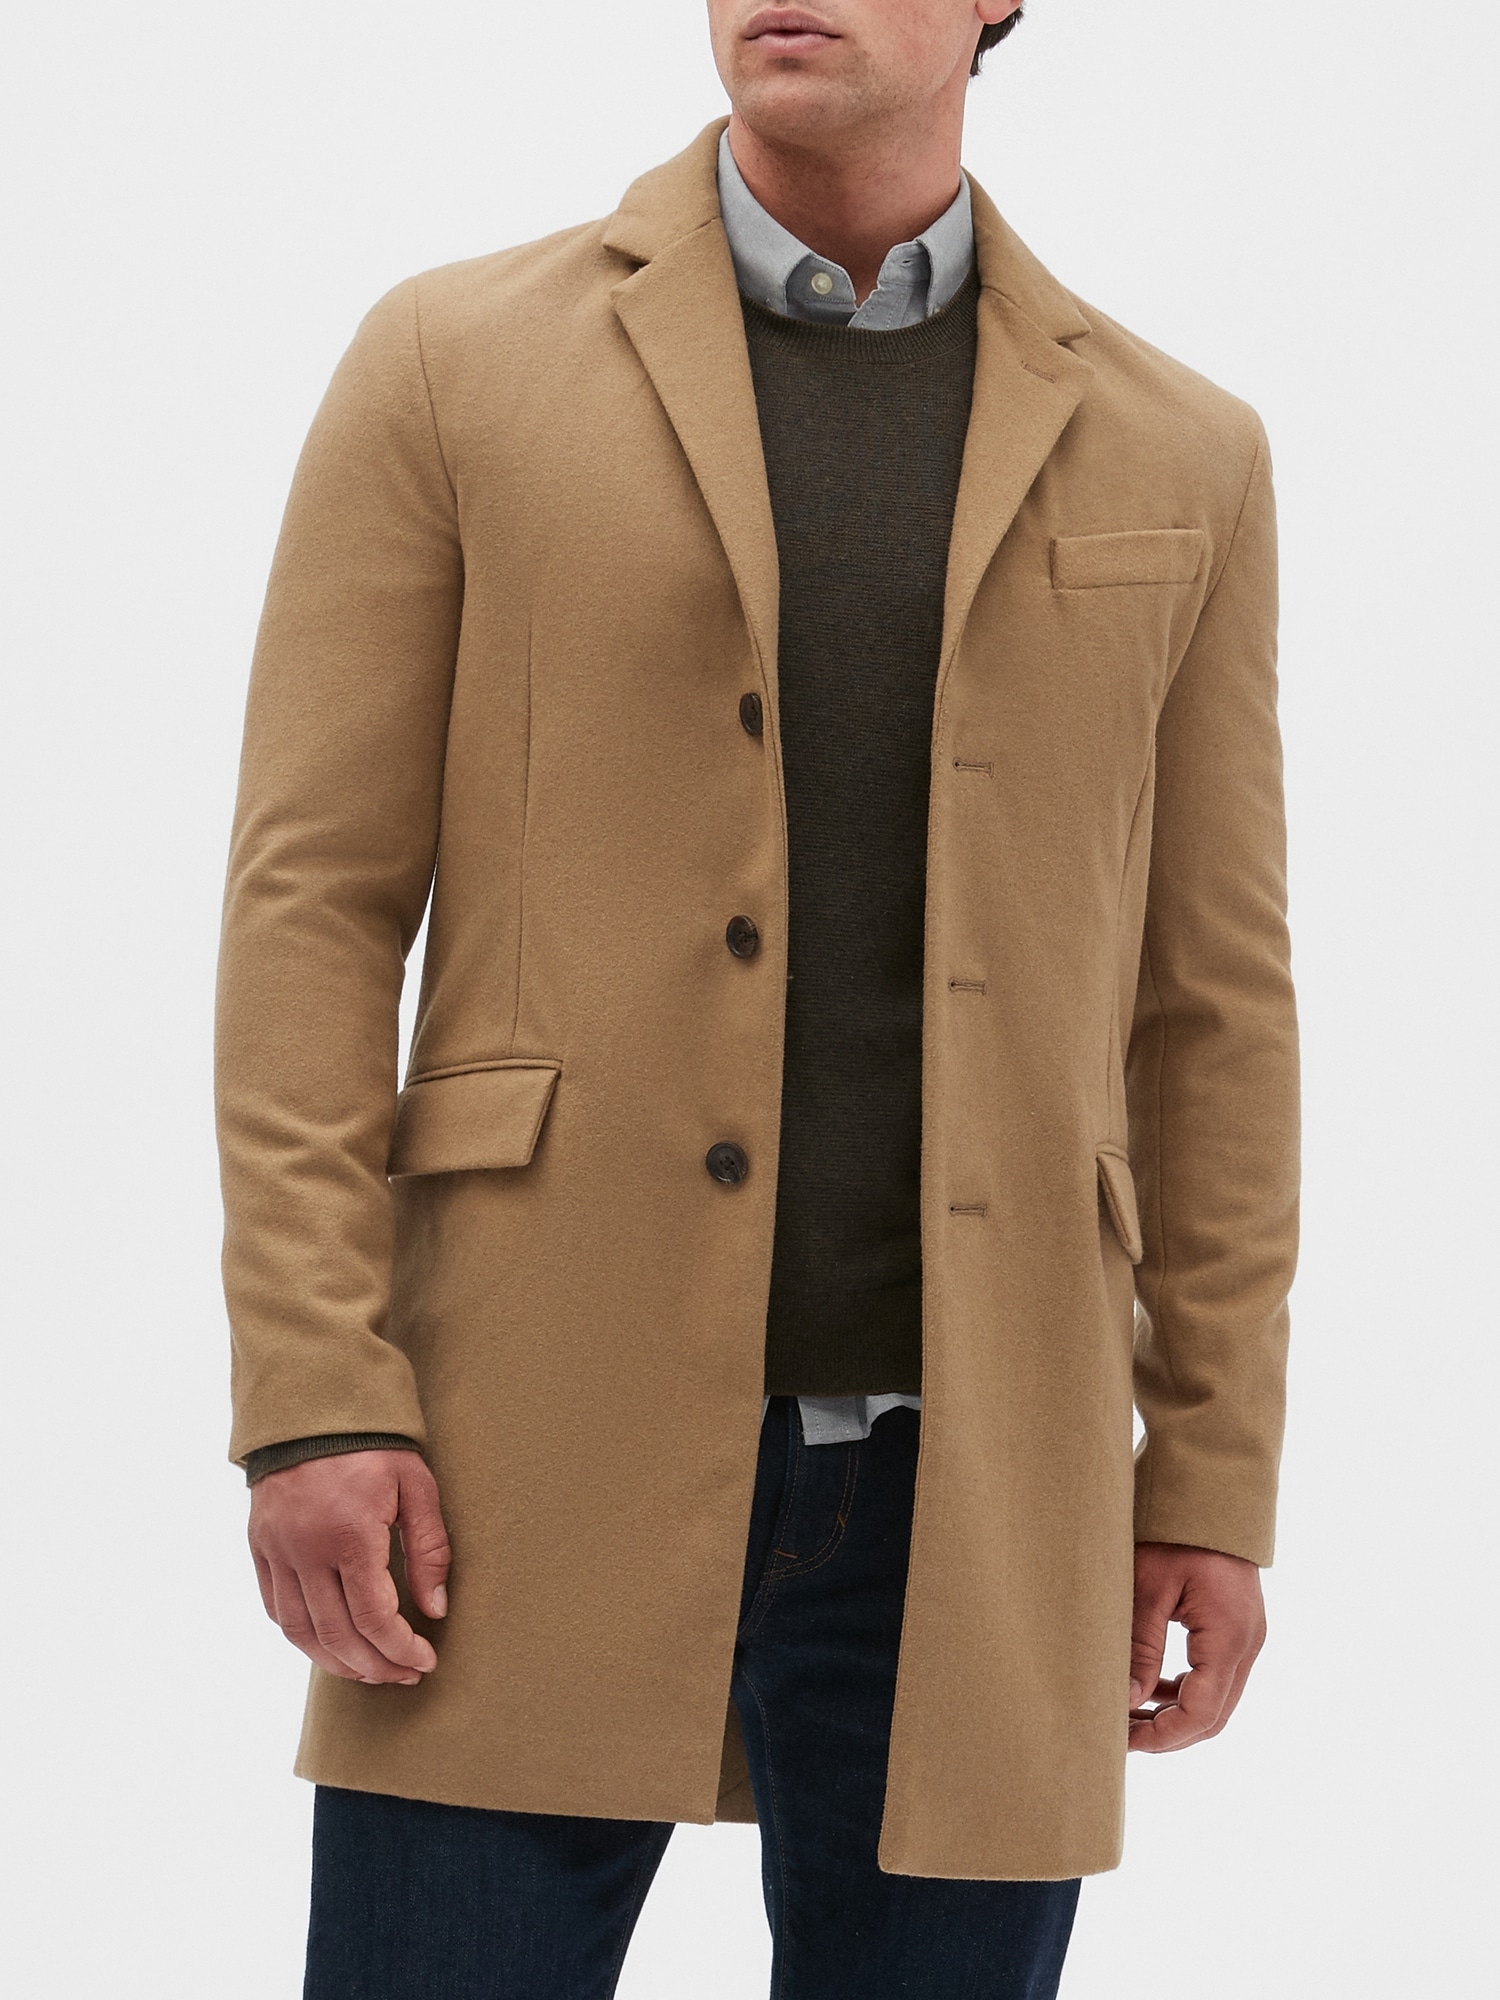 gap factory wool blend coat